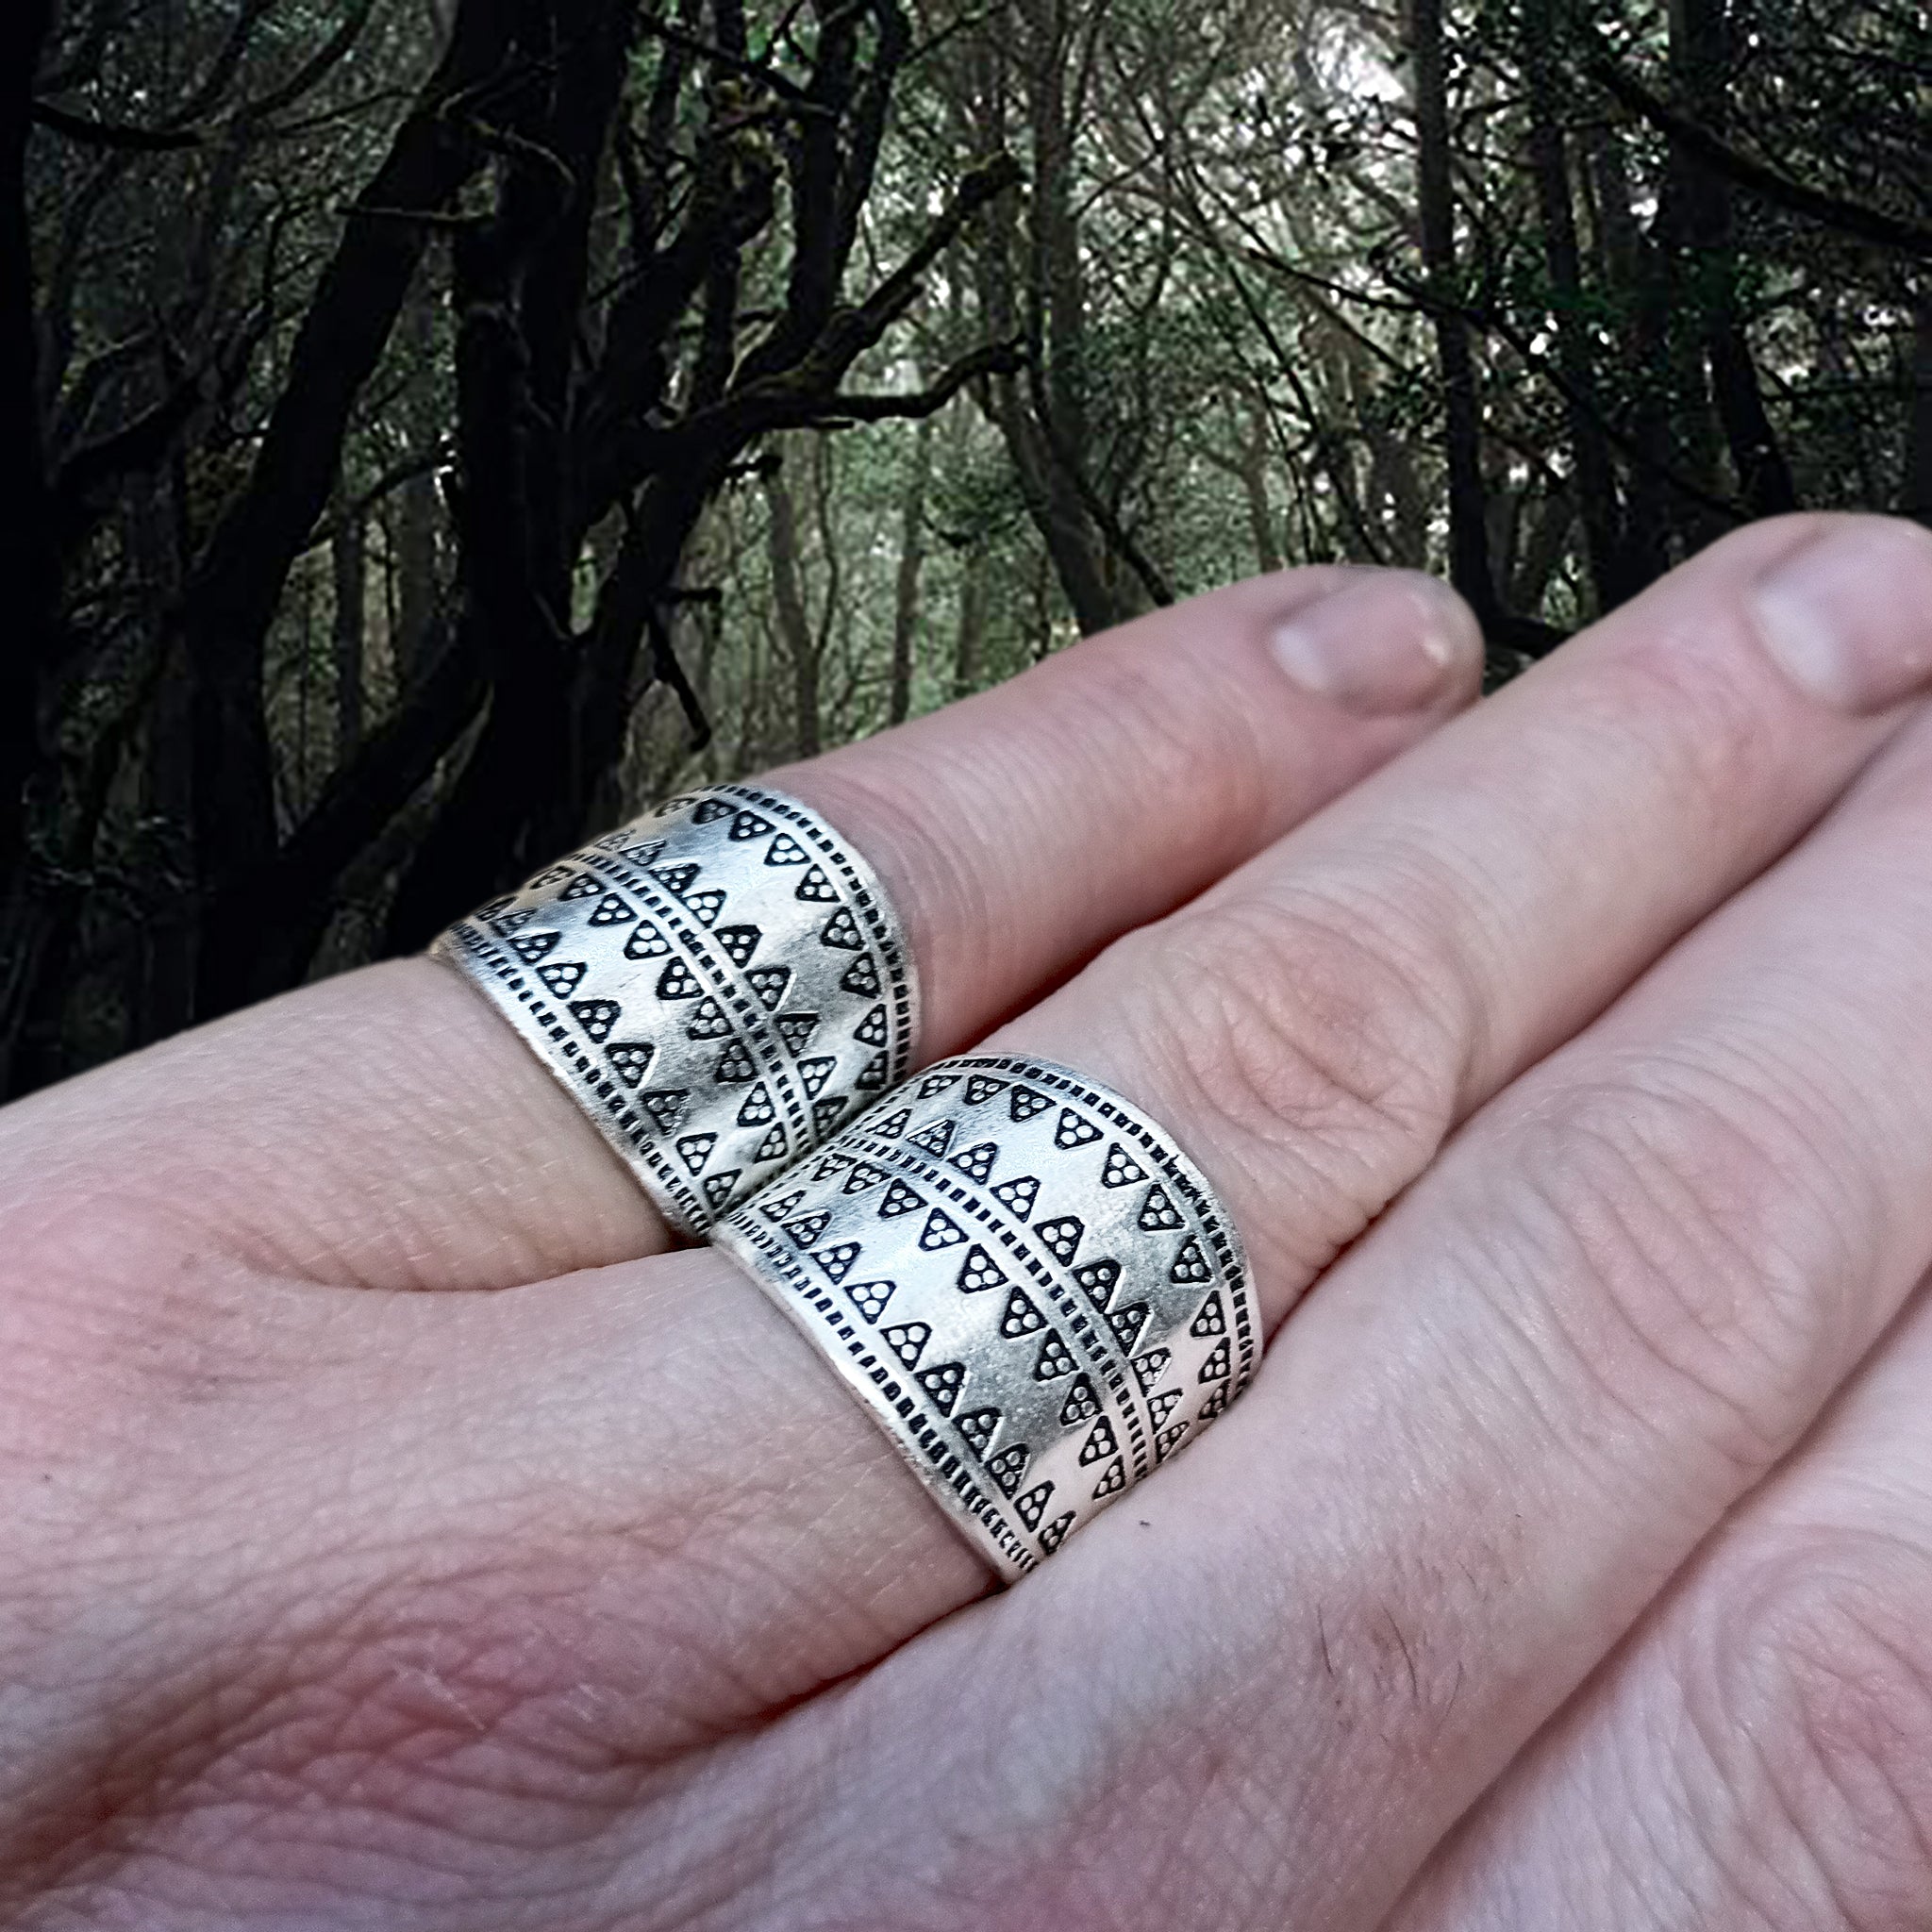 Embossed Silver Replica Viking Rings on Fingers